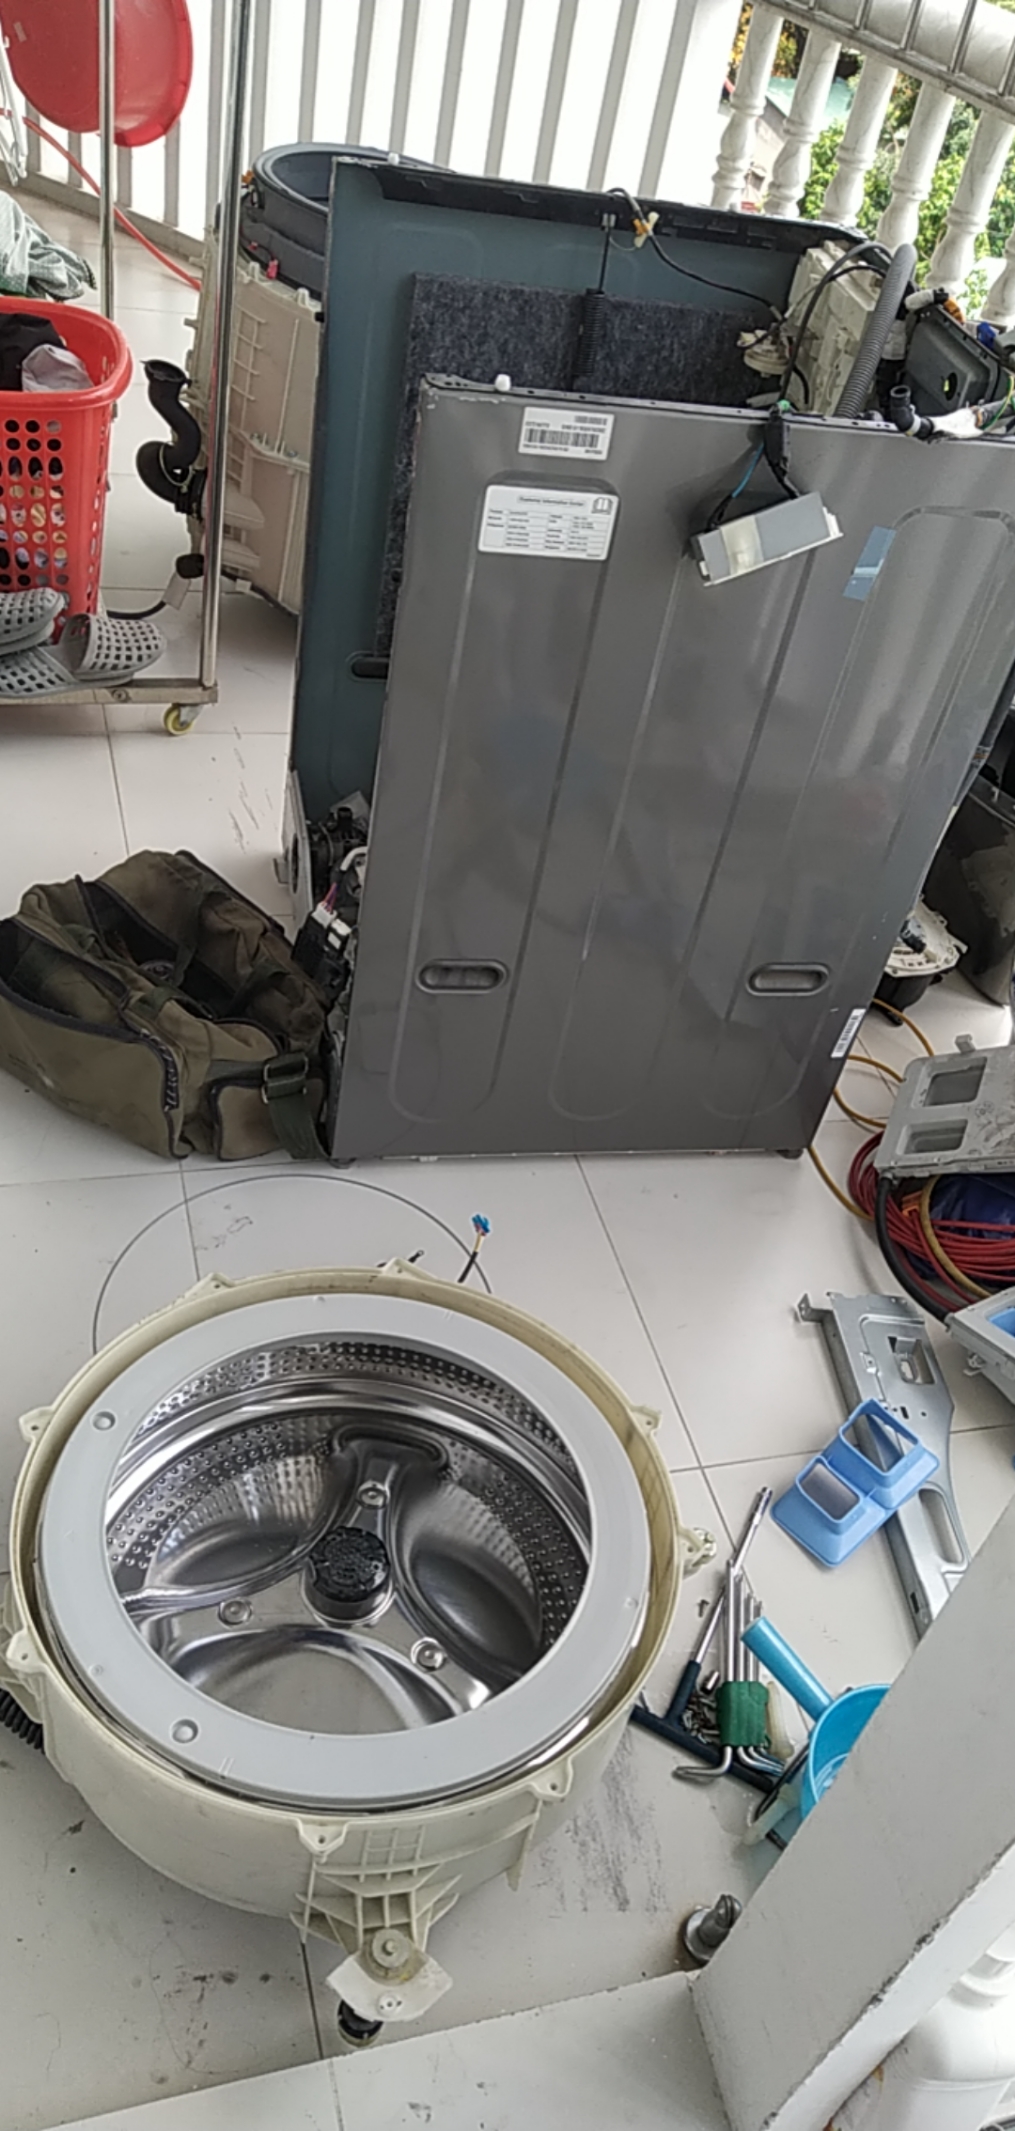 máy giặt electrolux báo lỗi loc